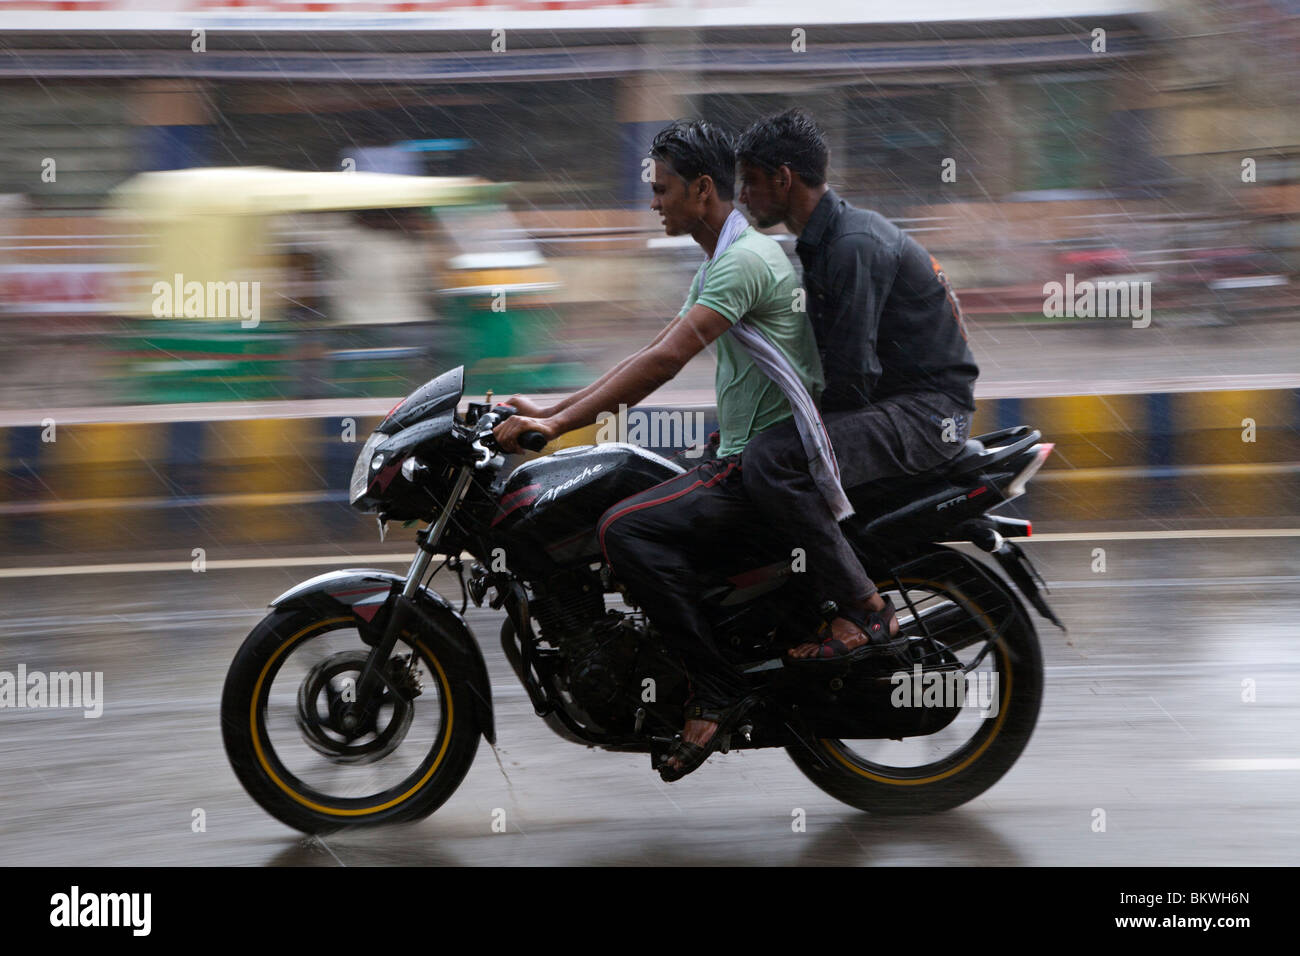 India, Uttar Pradesh, Agra, Motorcyclist and passenger in heavy monsoon rain Stock Photo